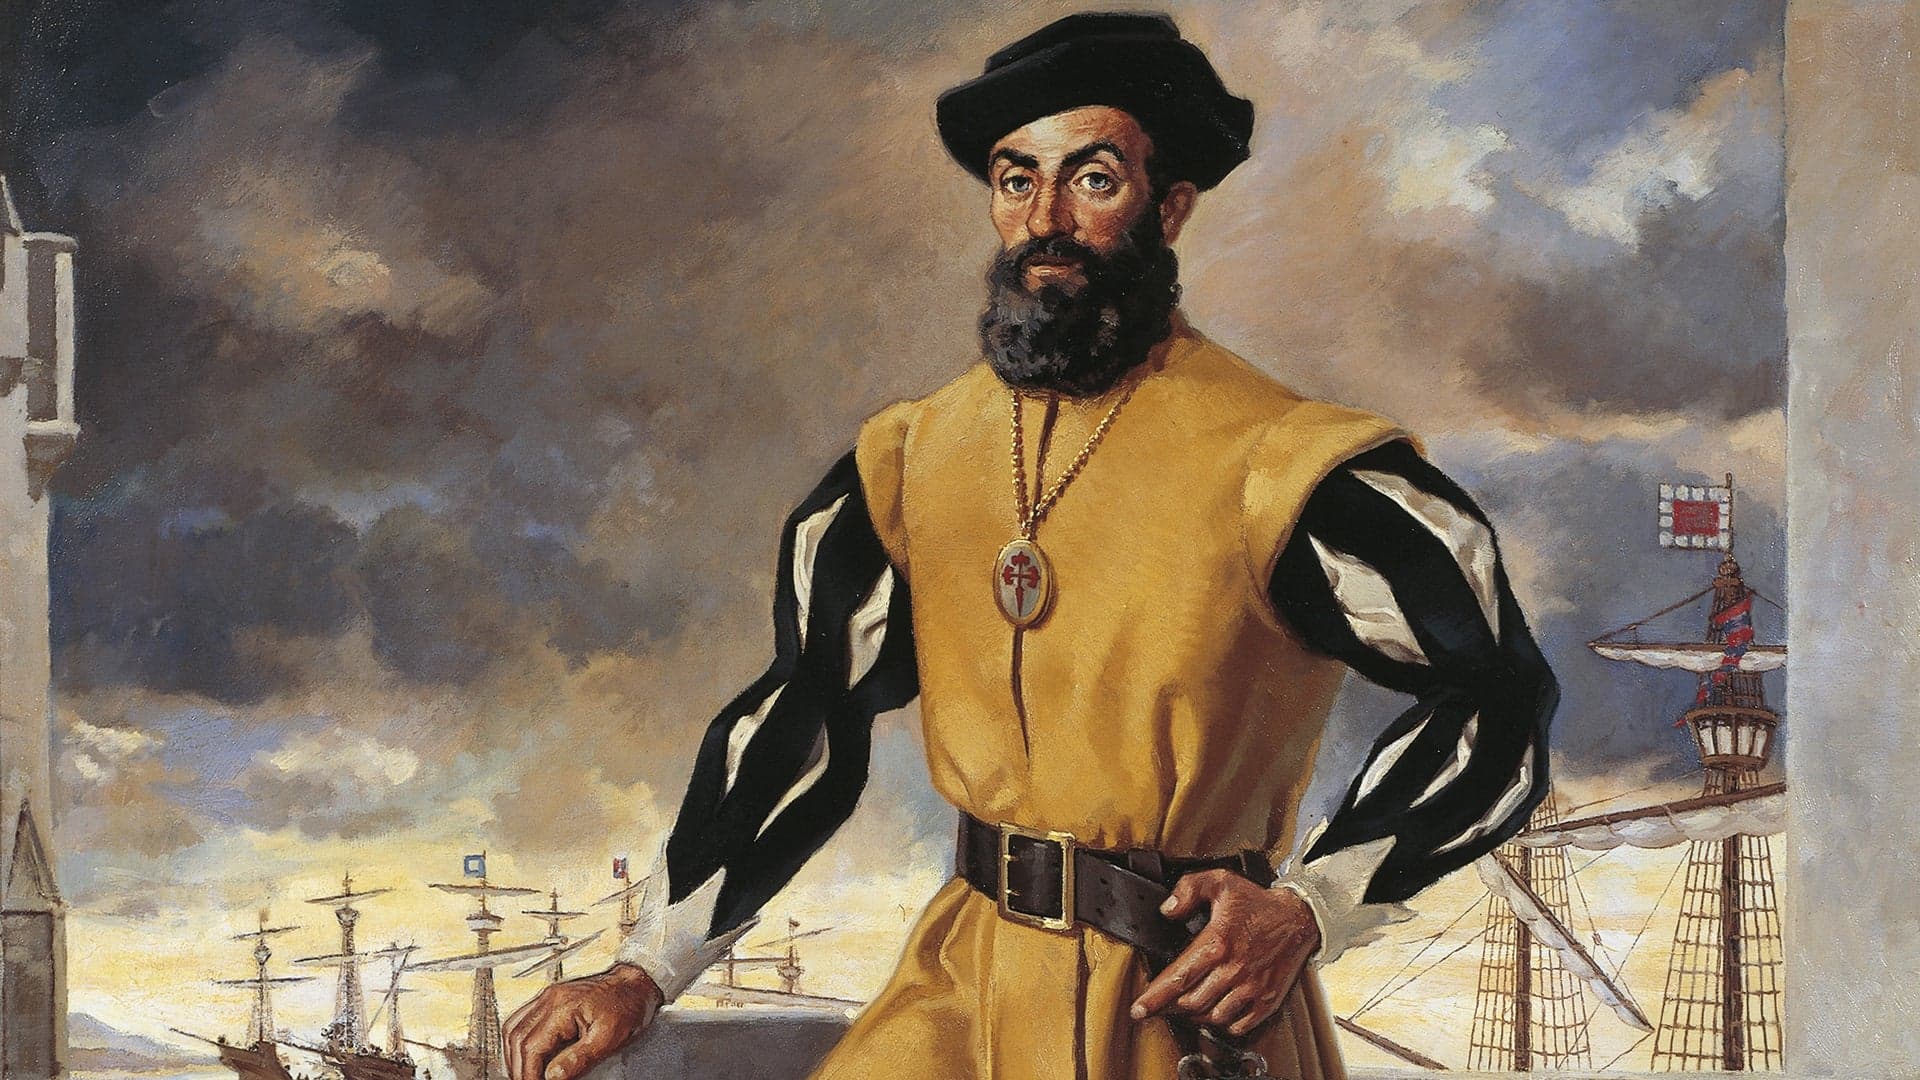 magellan's voyage to unknown continent